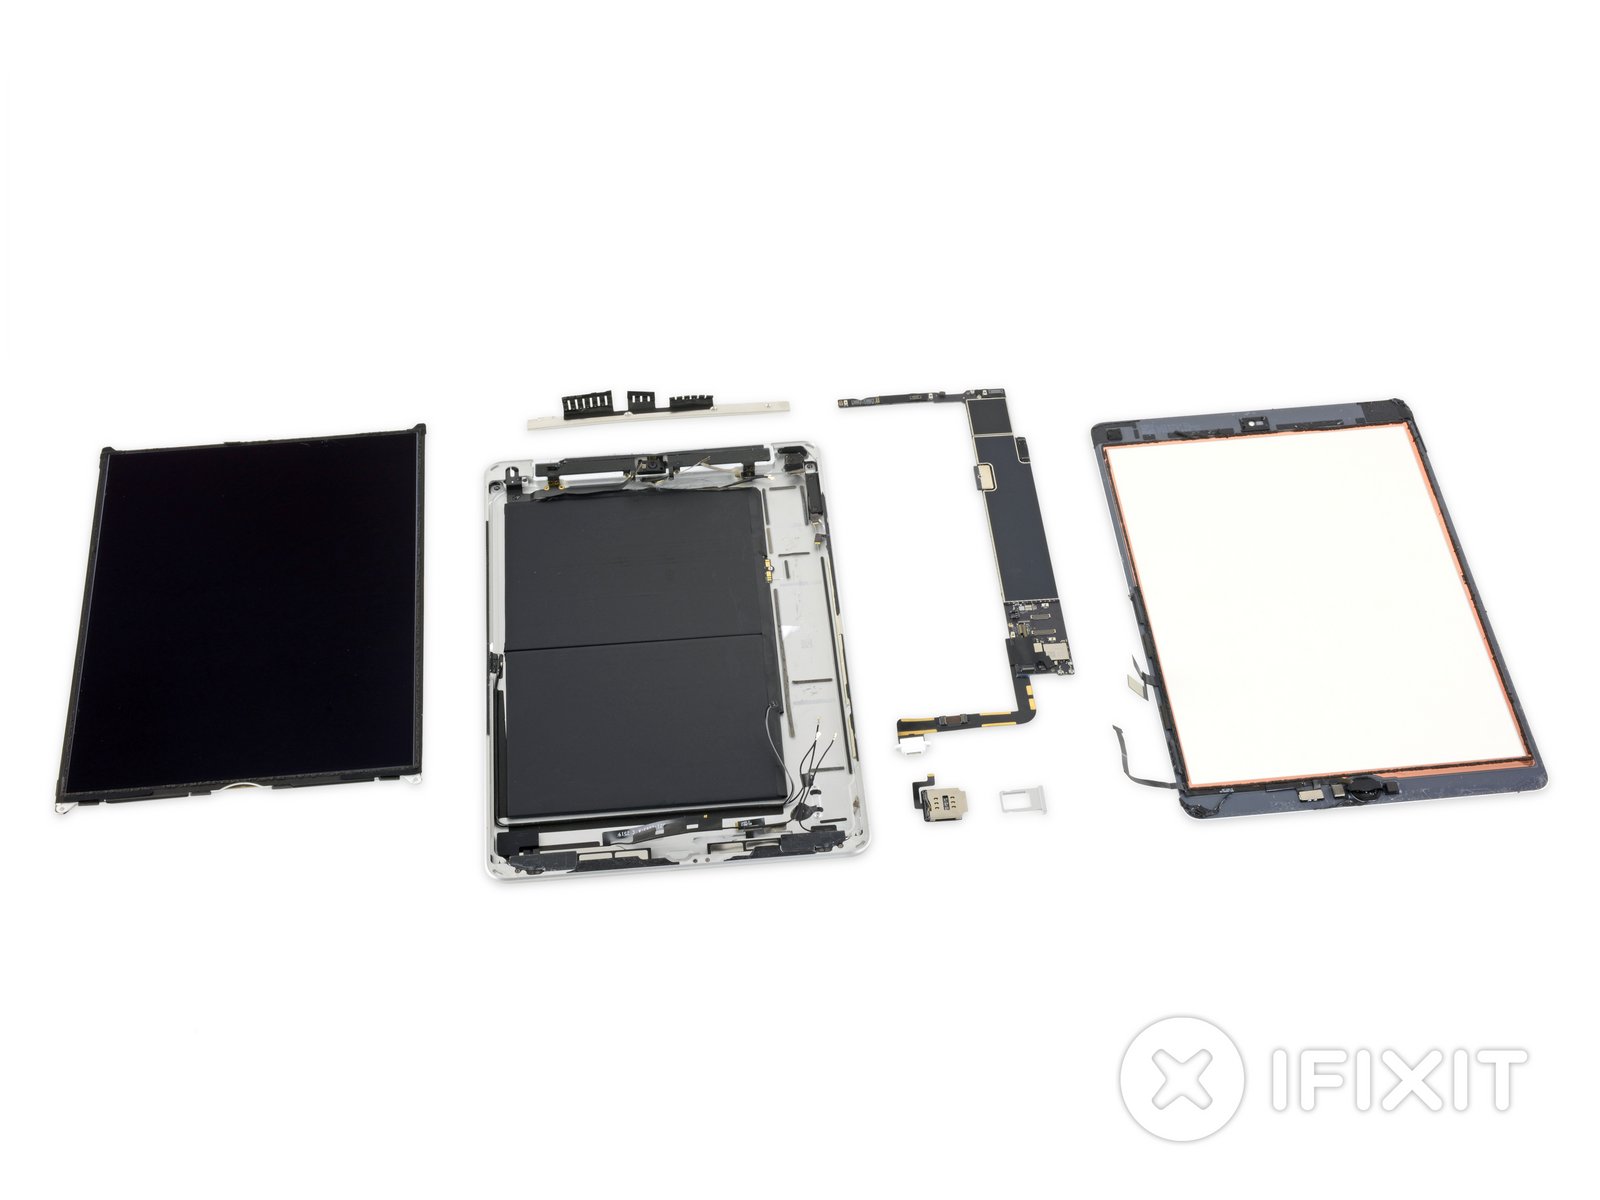 iFixit iPad 10.2 teardown